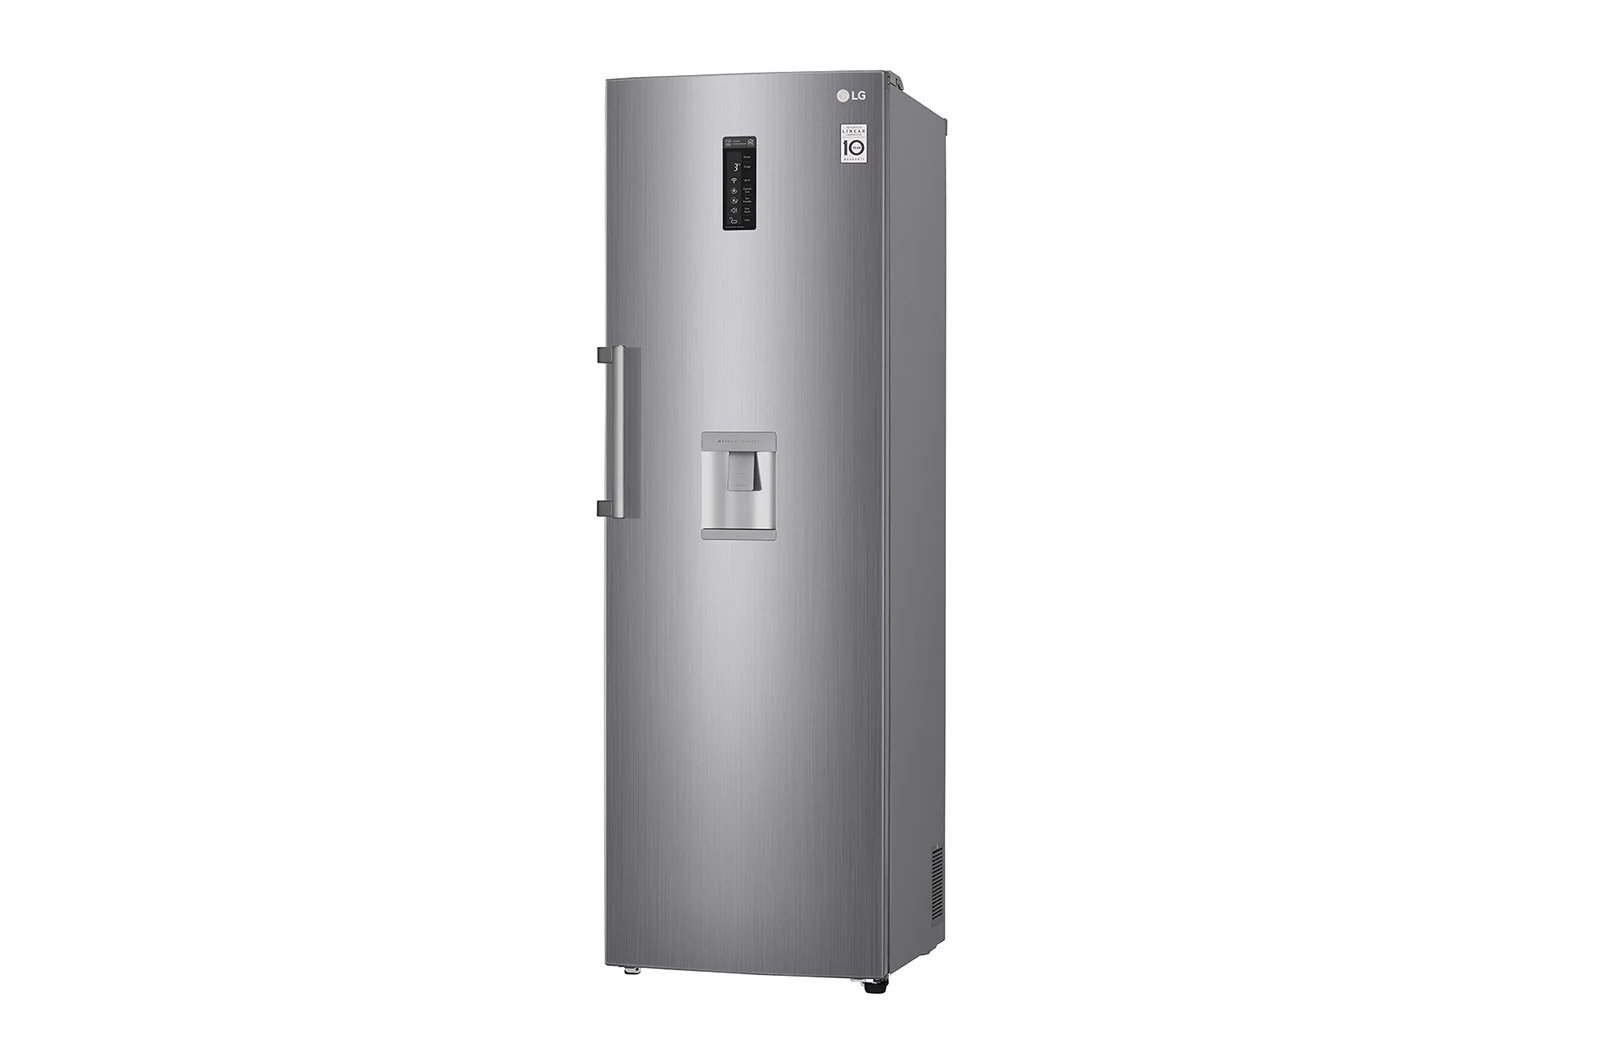 LG-Single-Door-Refrigerator-411L-GC-F411ELDM-nigeria.png